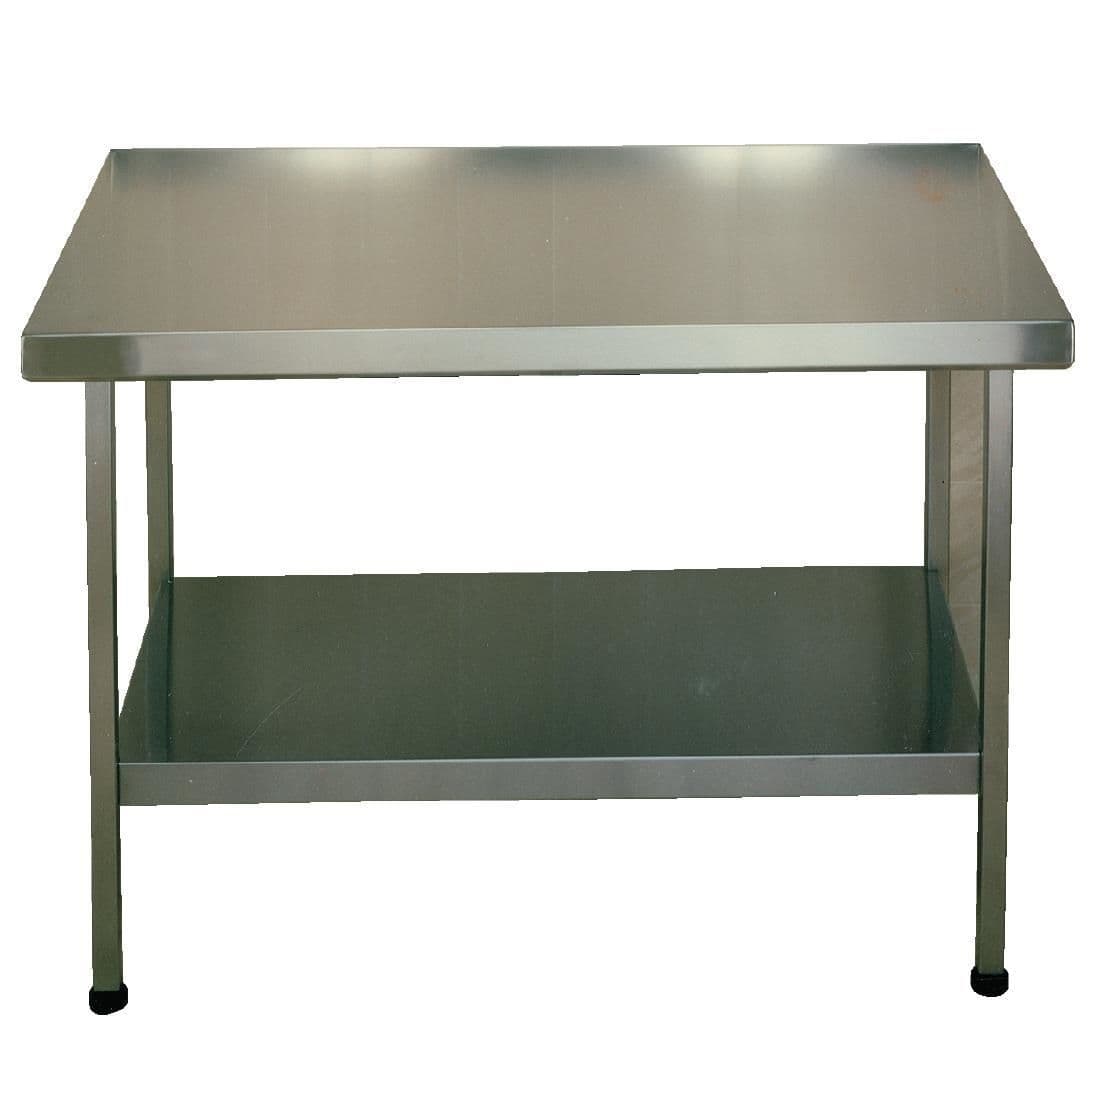 Franke Sissons Stainless Steel Centre Table 1200x650mm JD Catering Equipment Solutions Ltd